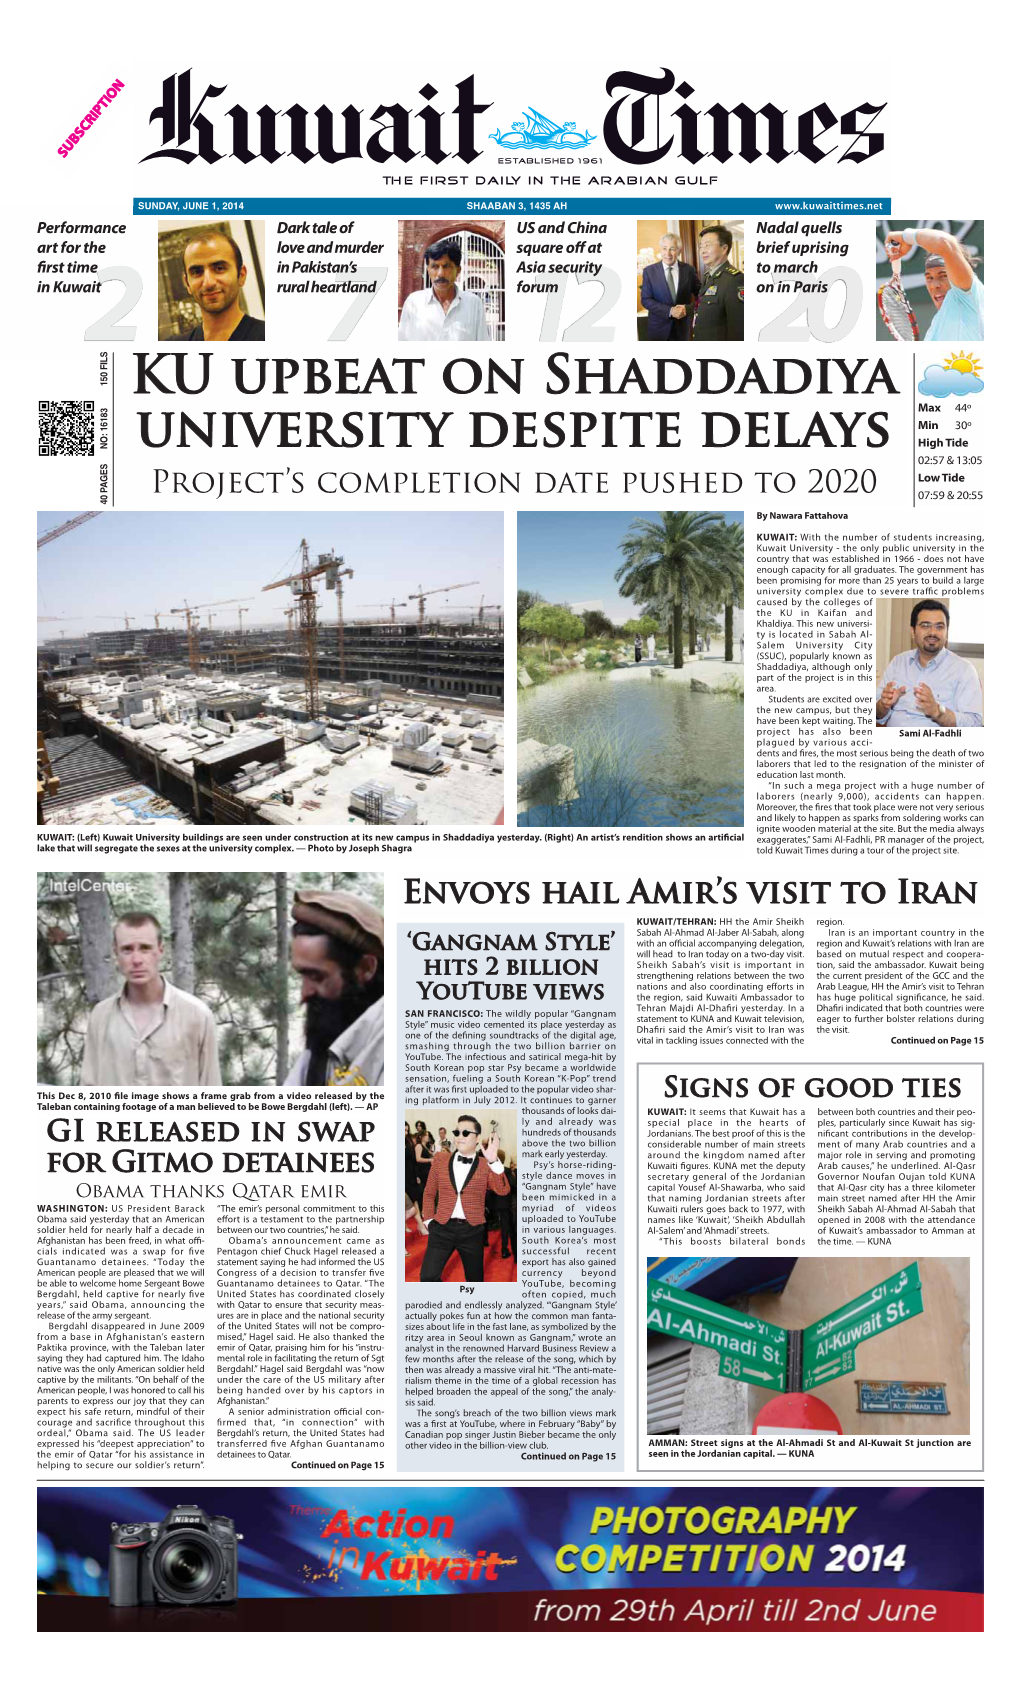 KU Upbeat on Shaddadiya University Despite Delays